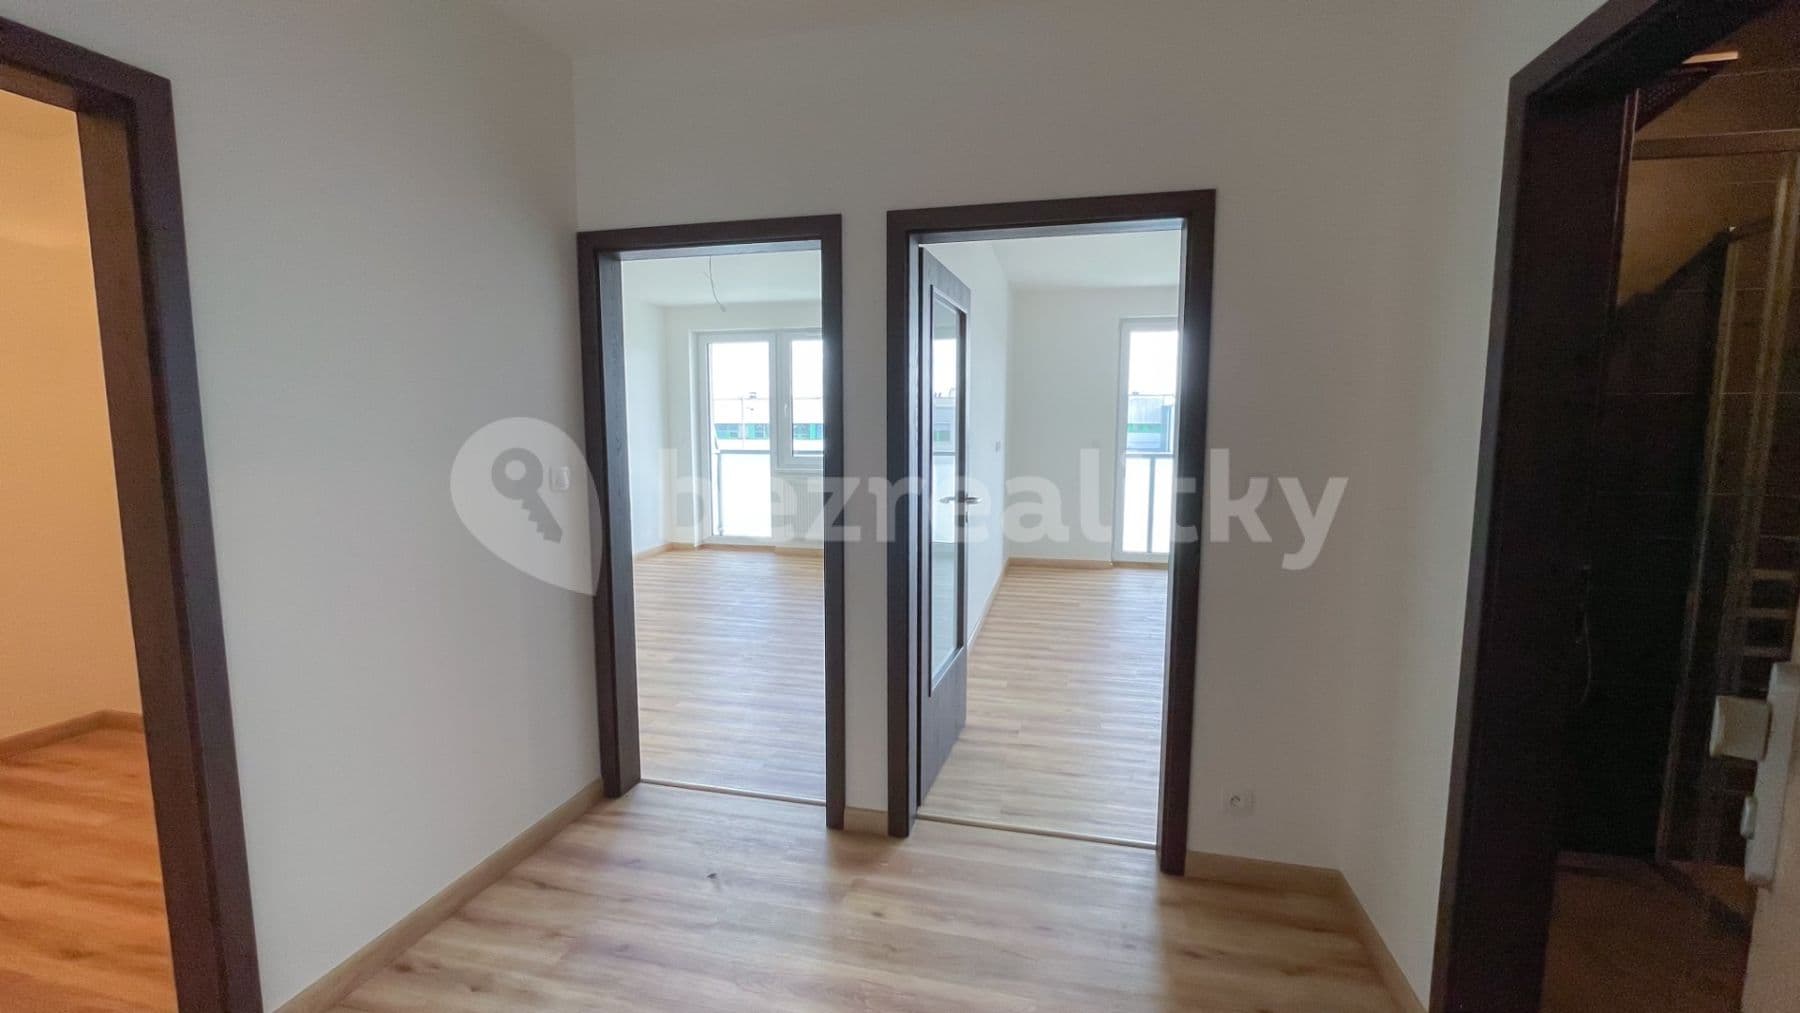 Predaj bytu 2-izbový 60 m², České Vrbné, České Budějovice, Jihočeský kraj